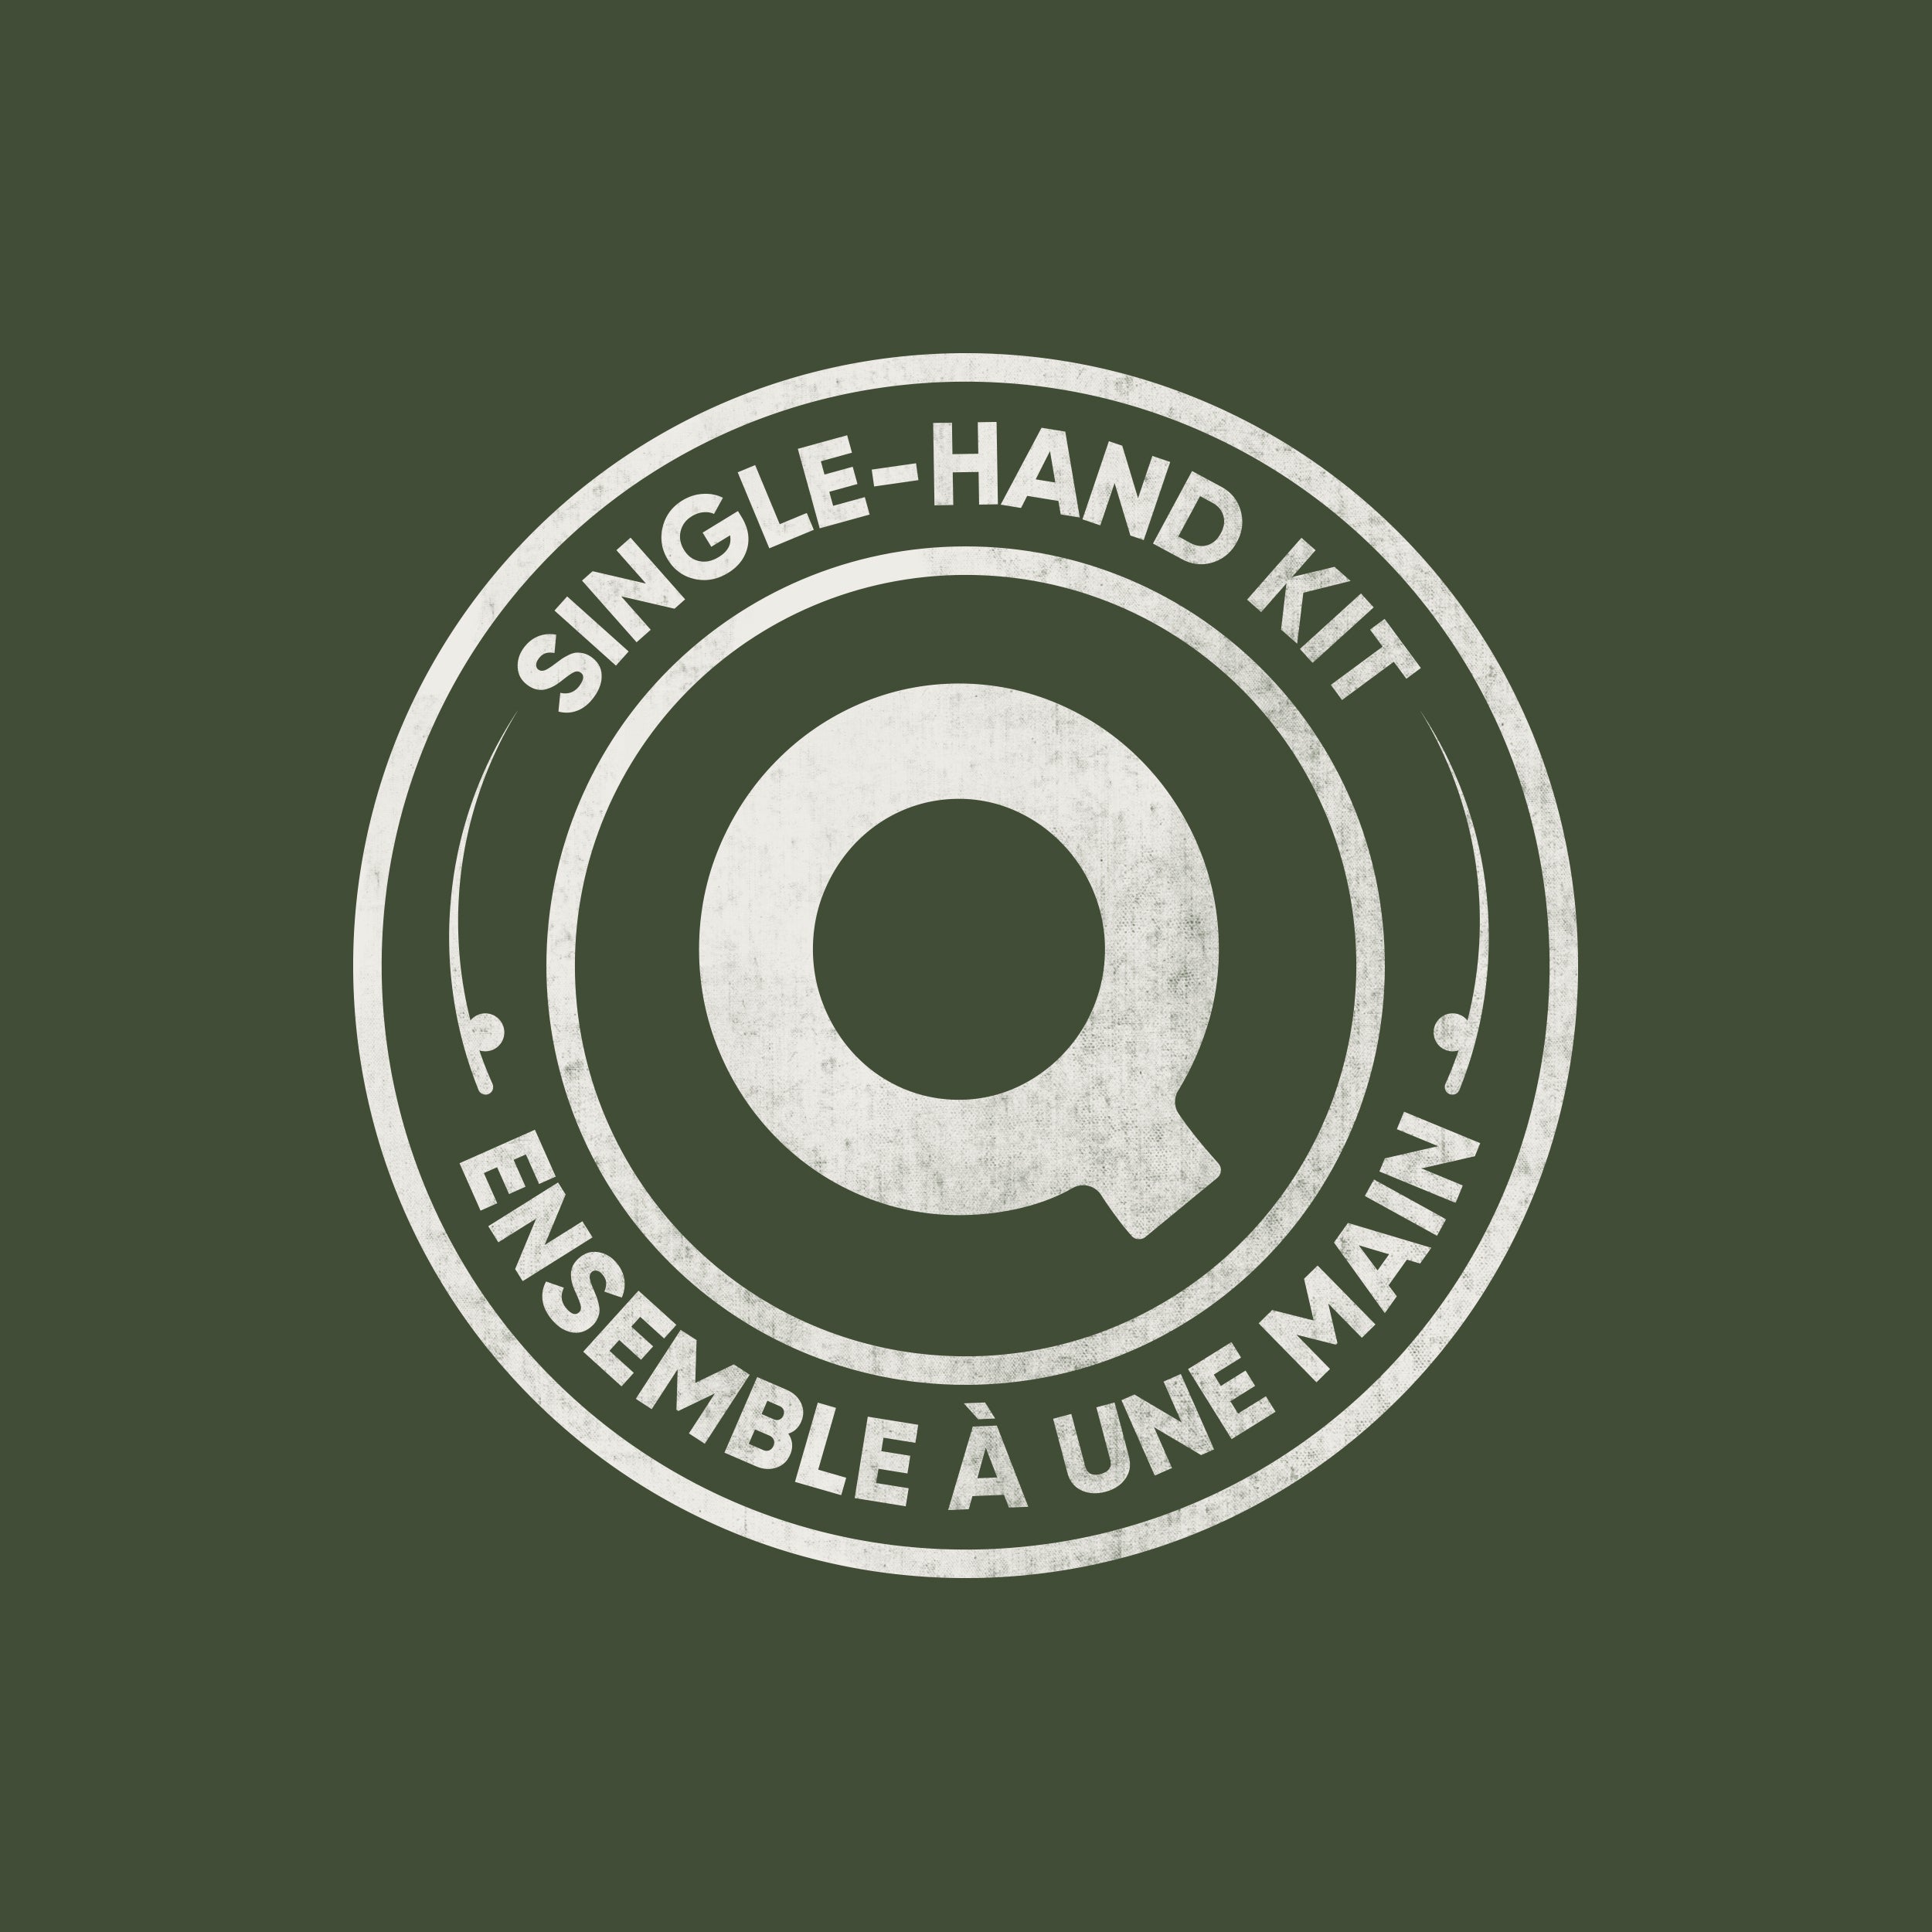 Q Single-Hand Kit